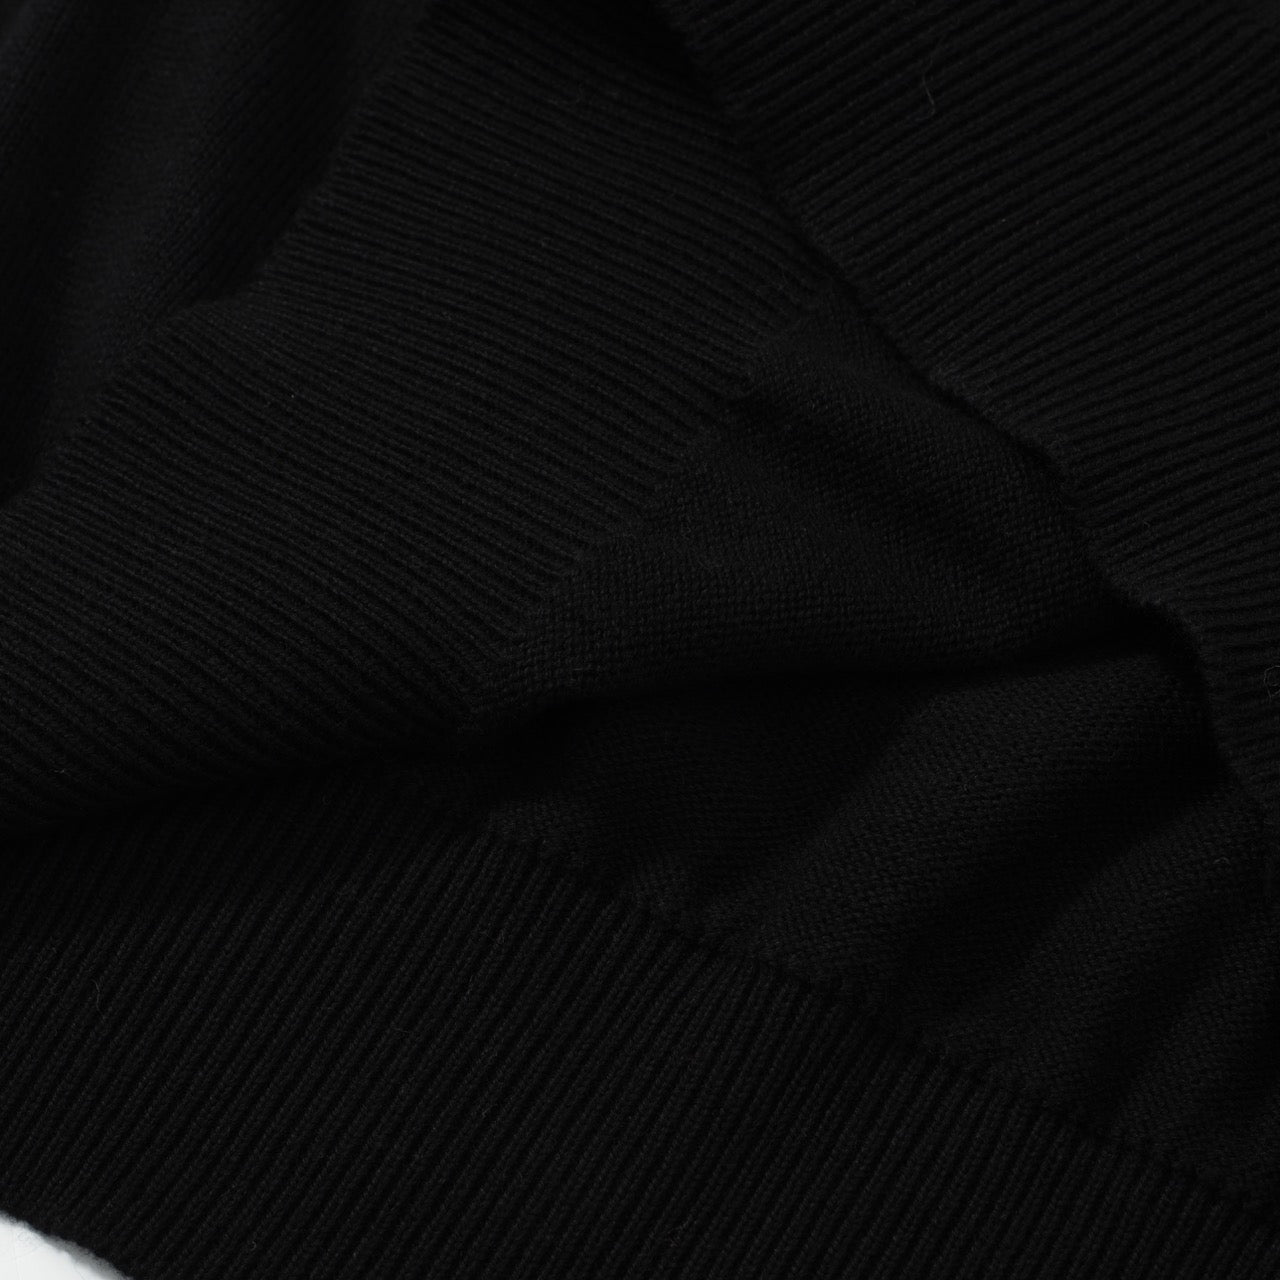 OXKNIT Women Vintage Clothing 1970s Mod Style Casual Long Sleeve Black & White Lightning Knit Retro T-shirts